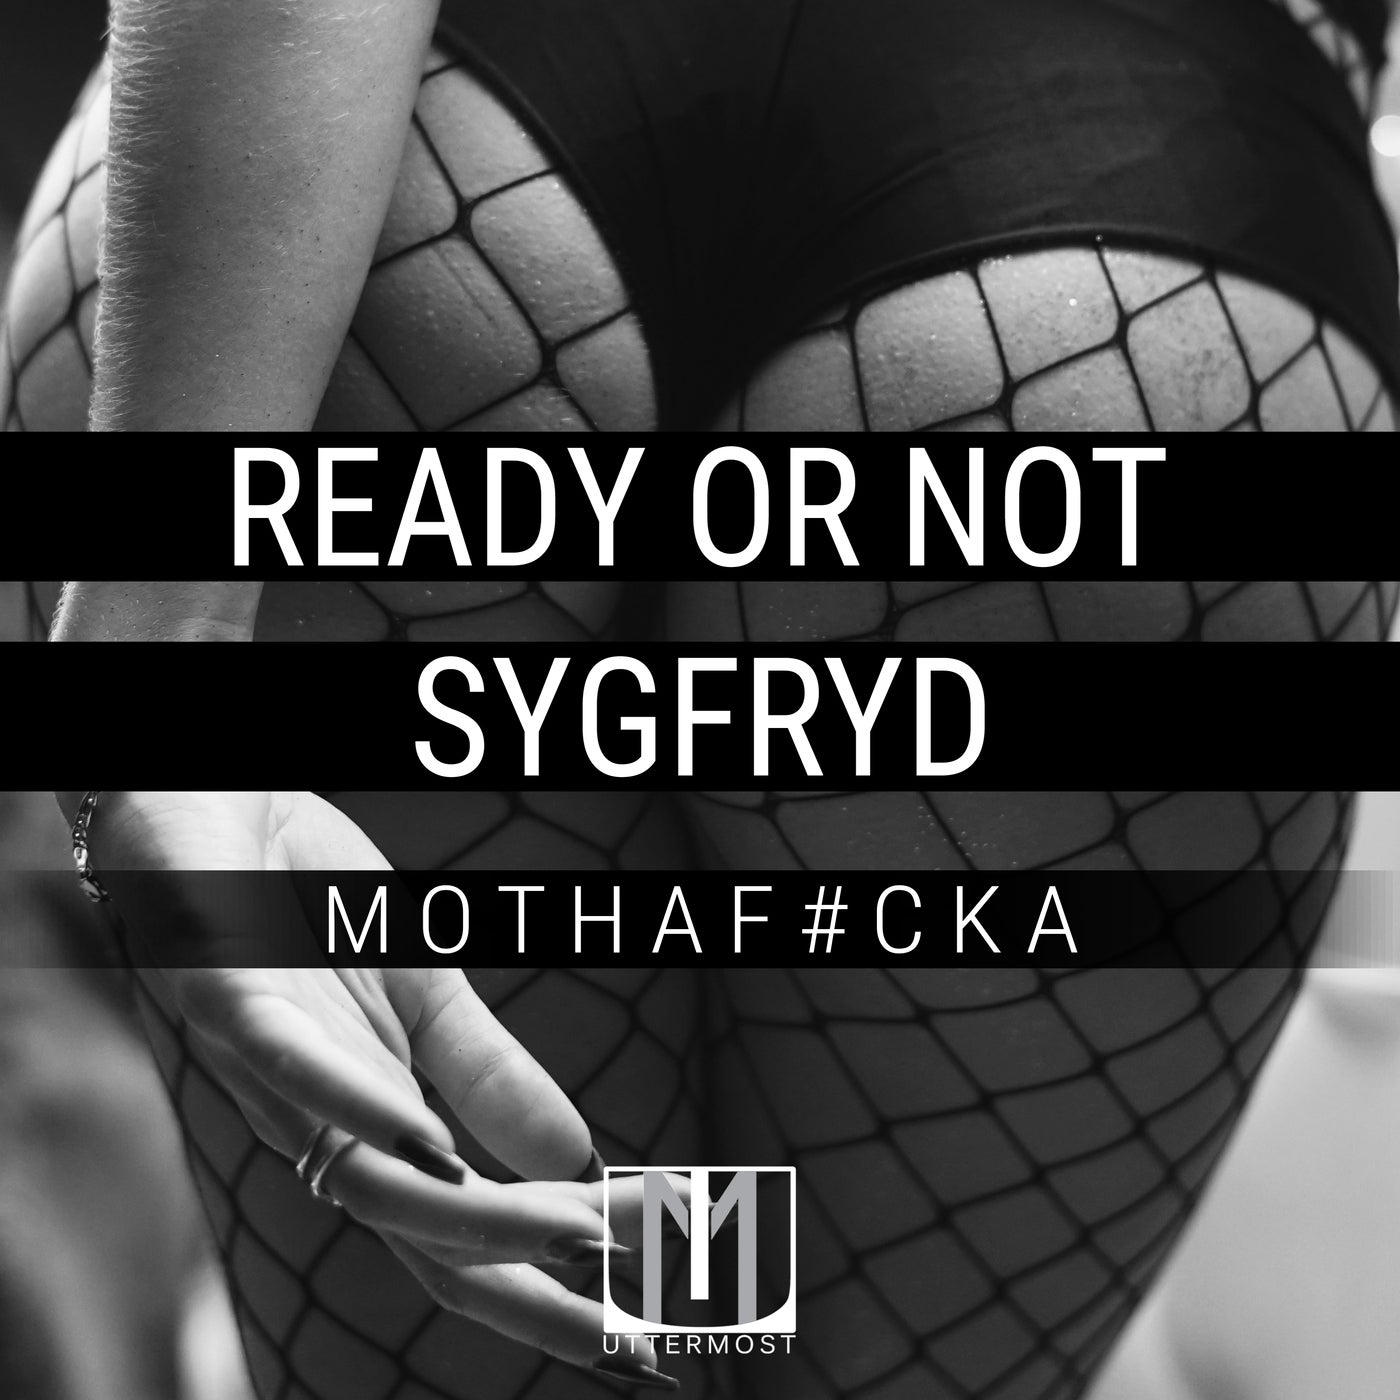 MothaF#cka